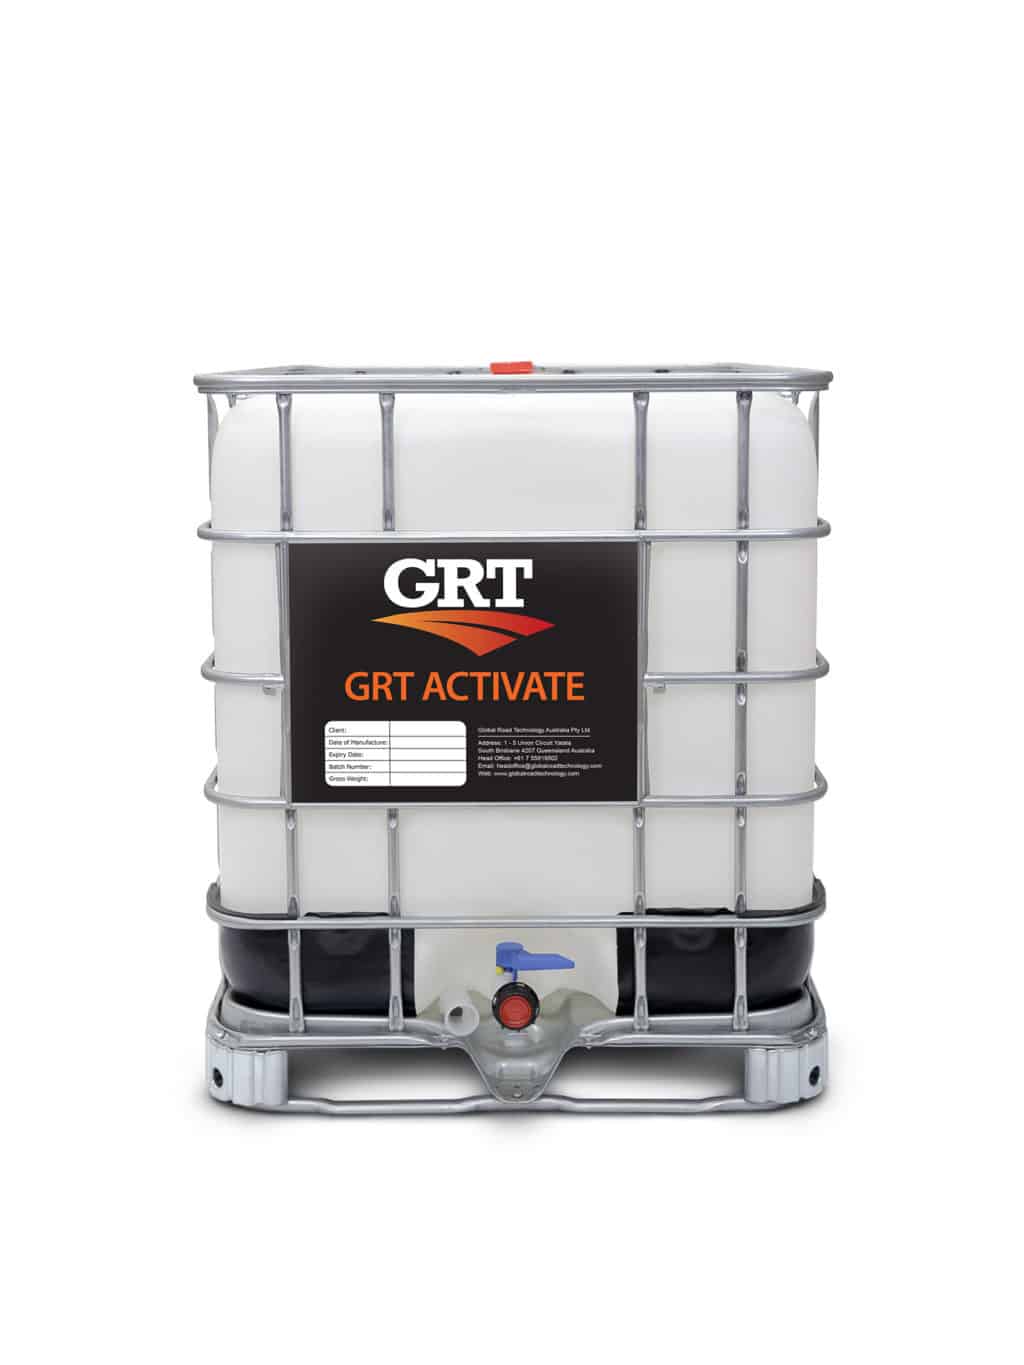 GRT Activate